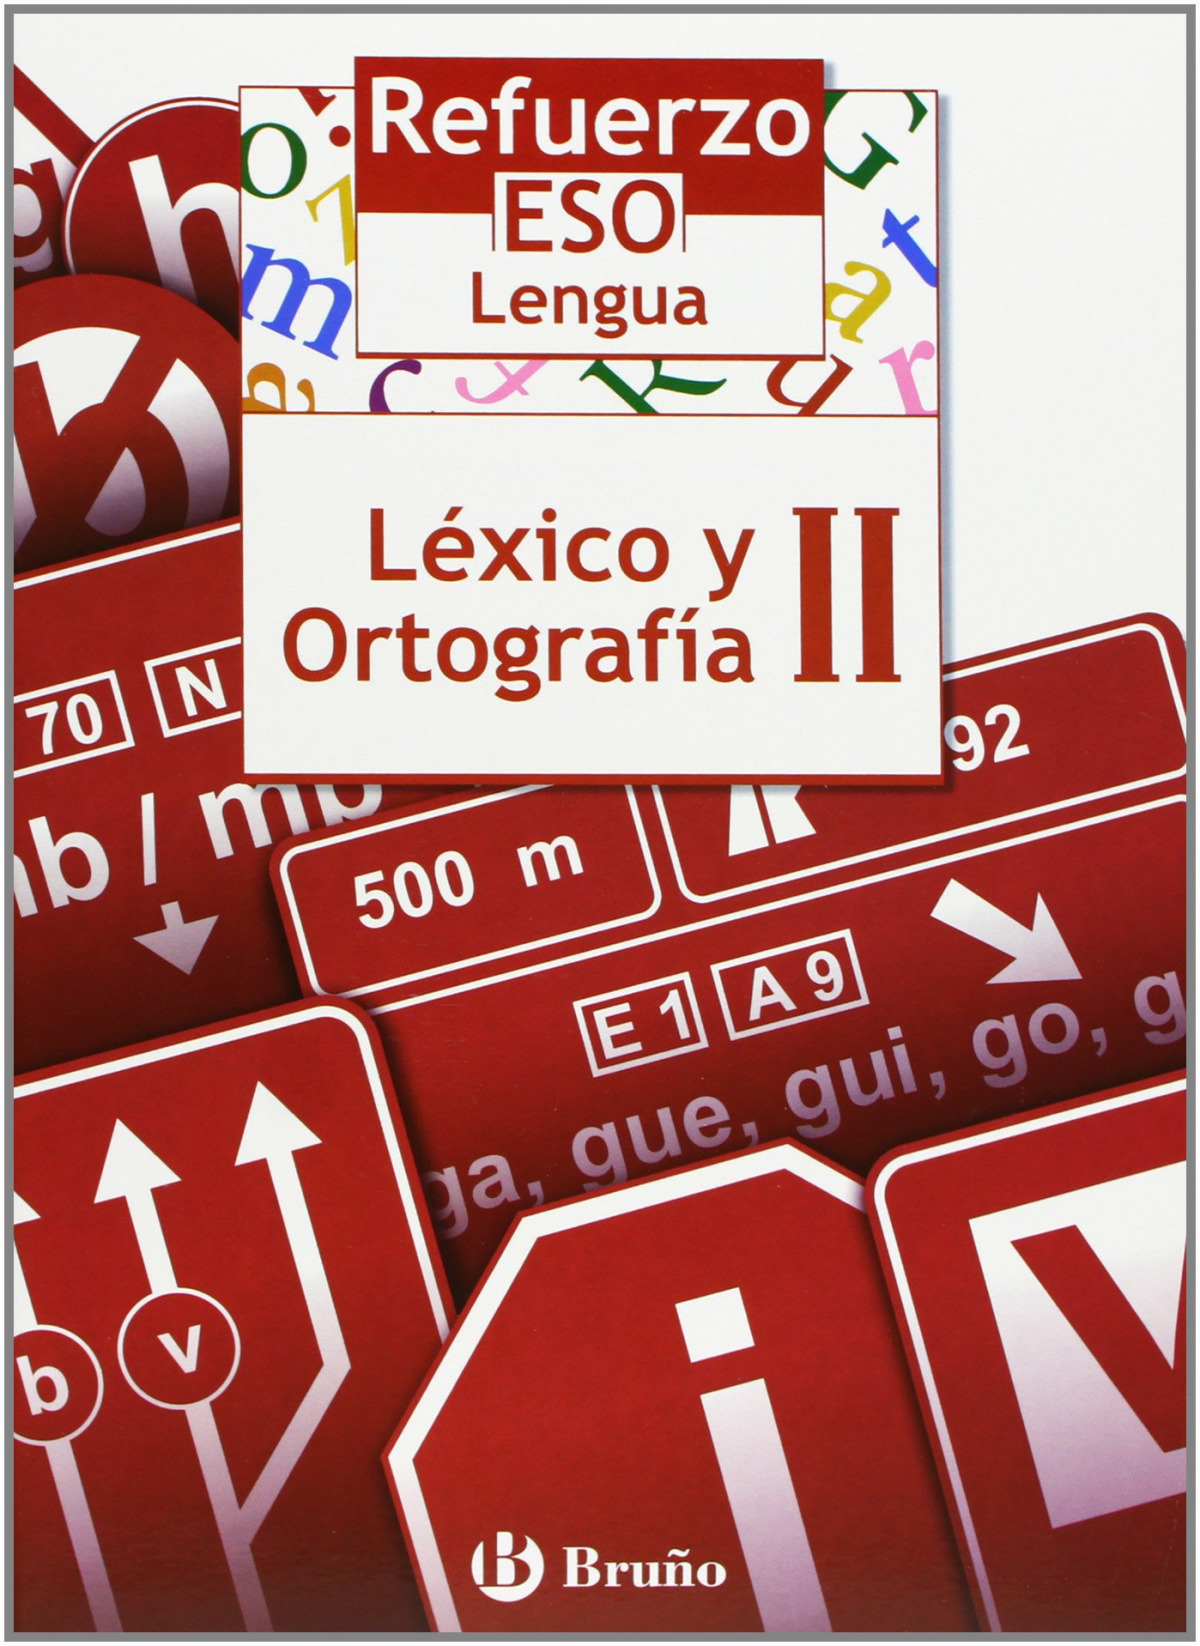 (05).refuerzo lengua eso (ii.lexico ortografia) - Gómez Picapeo, Jesús/Lajo Buil, Julio/Toboso Sánchez, Jesús/Vidorreta García, Concha